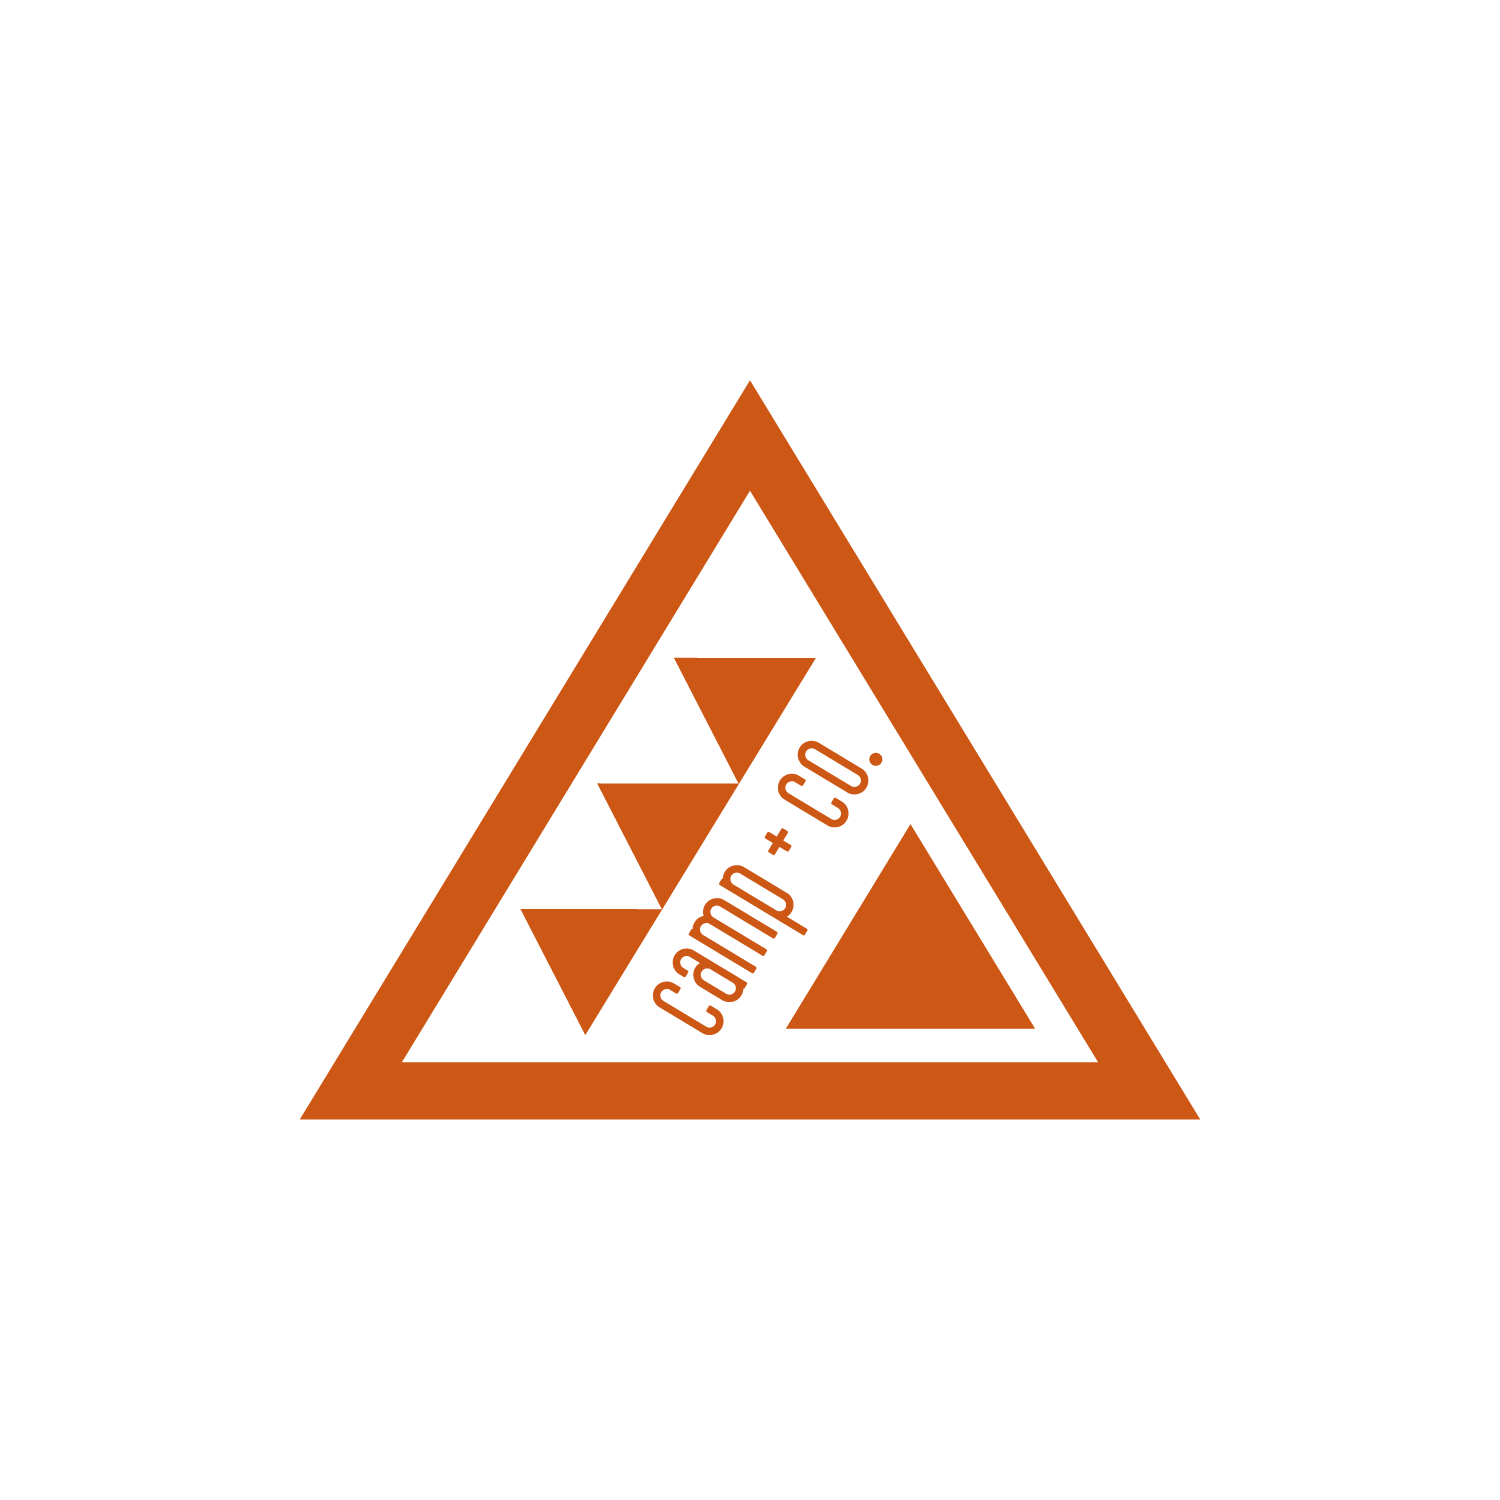 Camp + Co. Logo